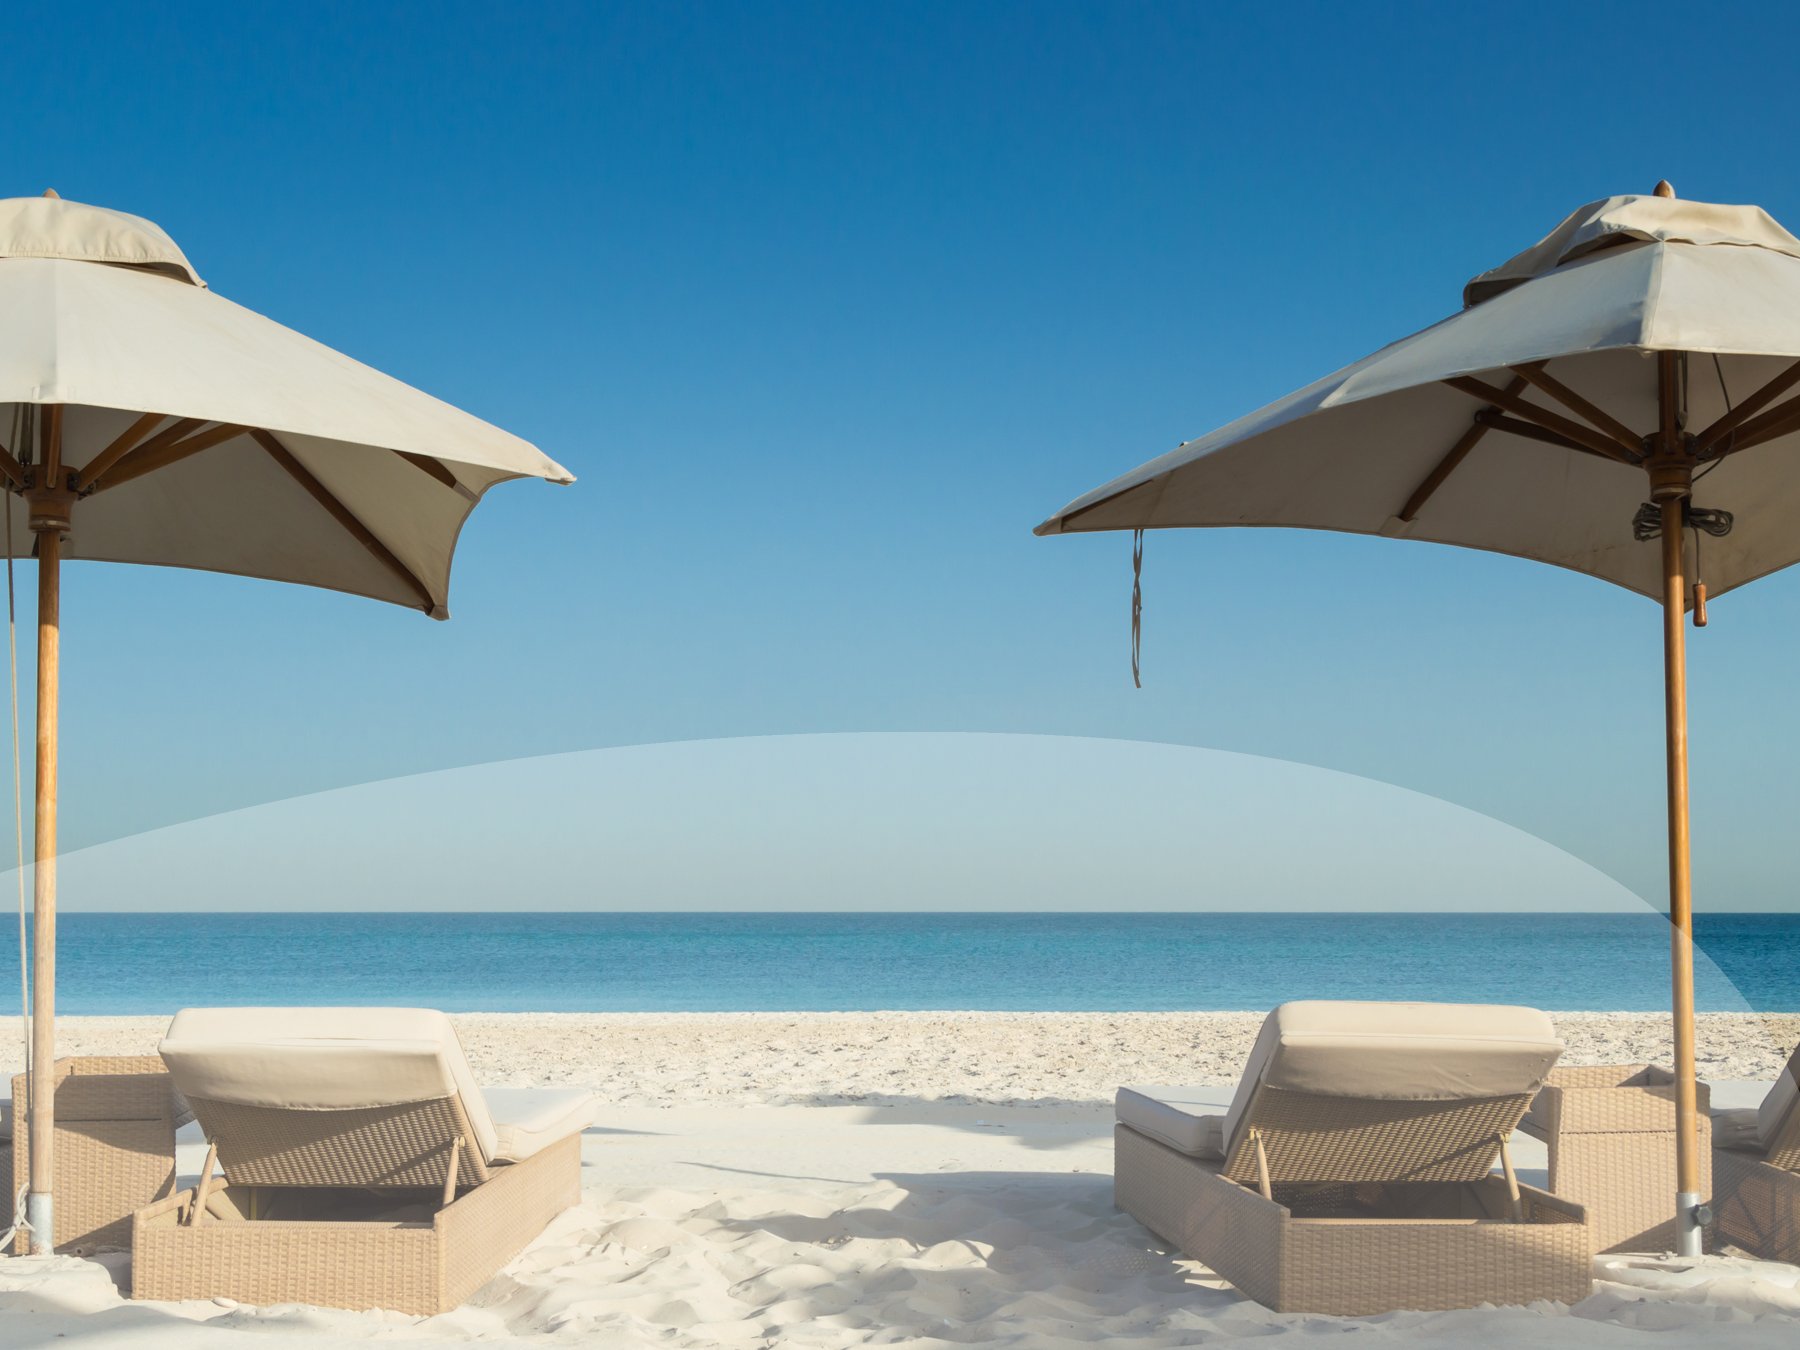 Beach umbrellas at a beautiful white beach in Abu Dhabi, UAE. The sea and a clear blue sky in the background.